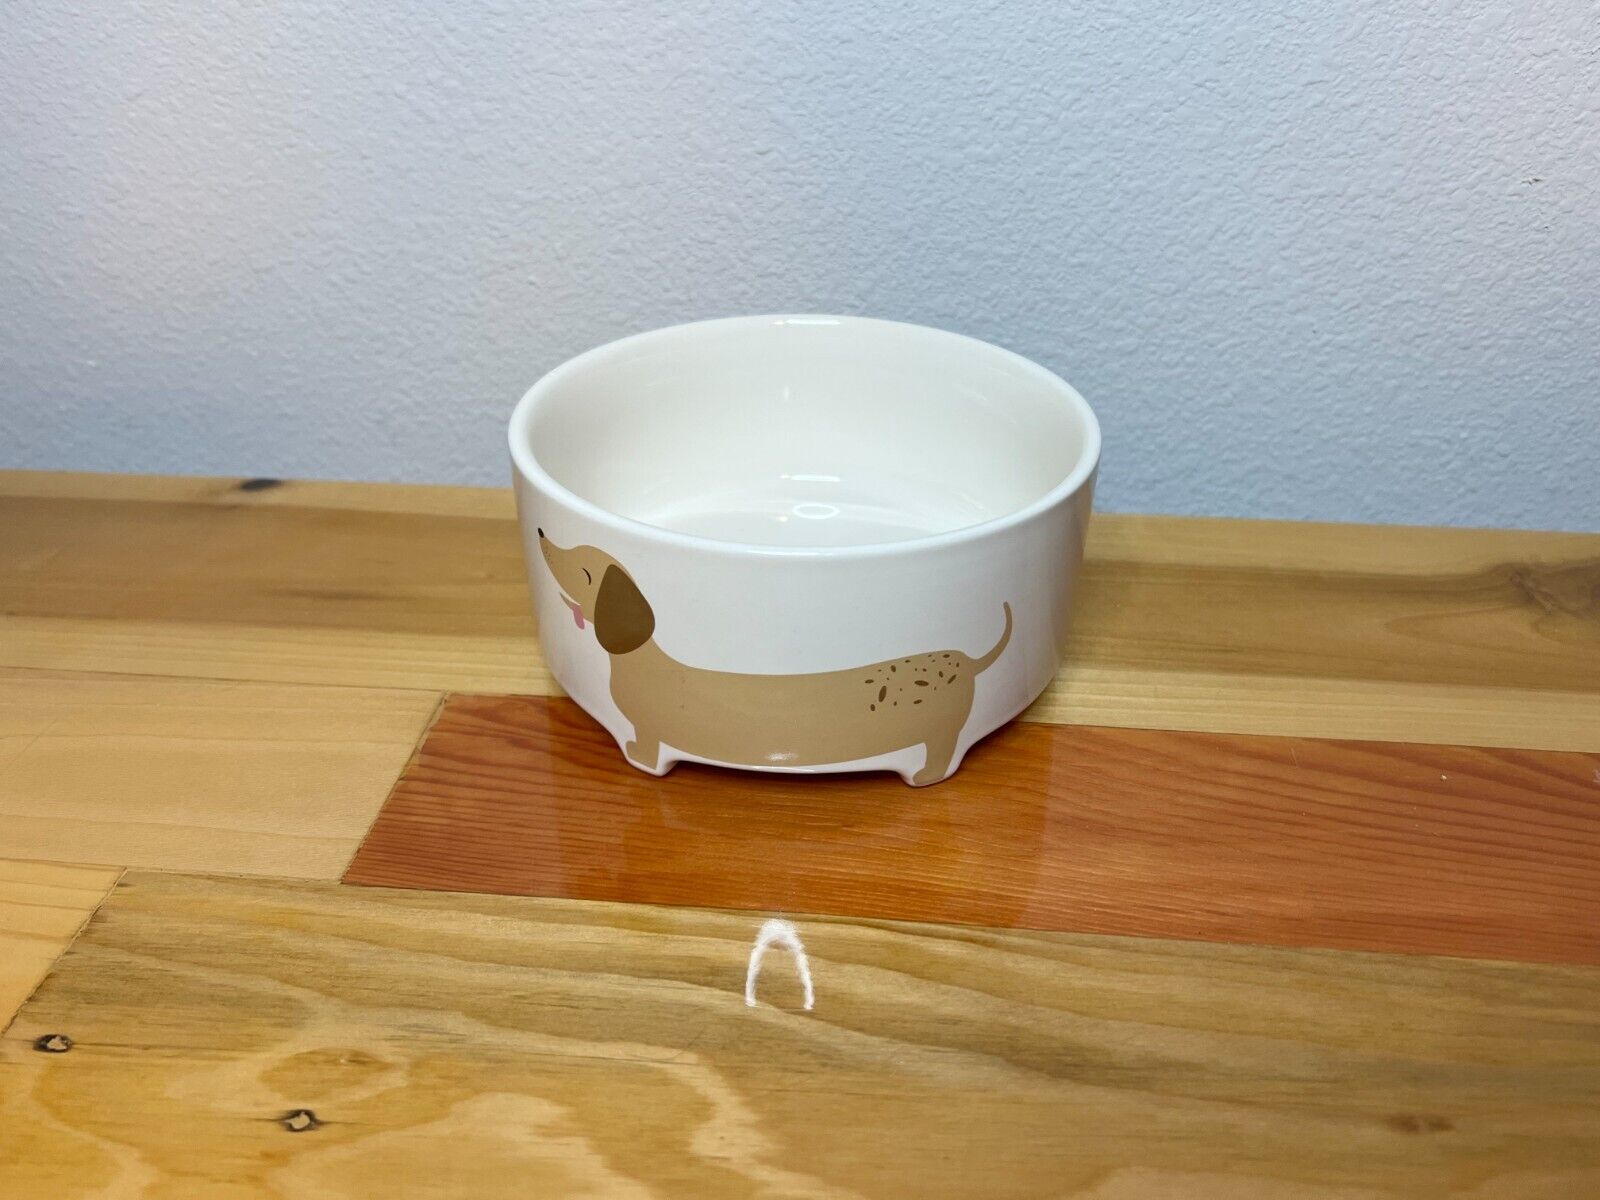 Dachshund Dog Bowl - EveryYay Dining In Footed Ceramic Dog Bowl, 3.4 Cups